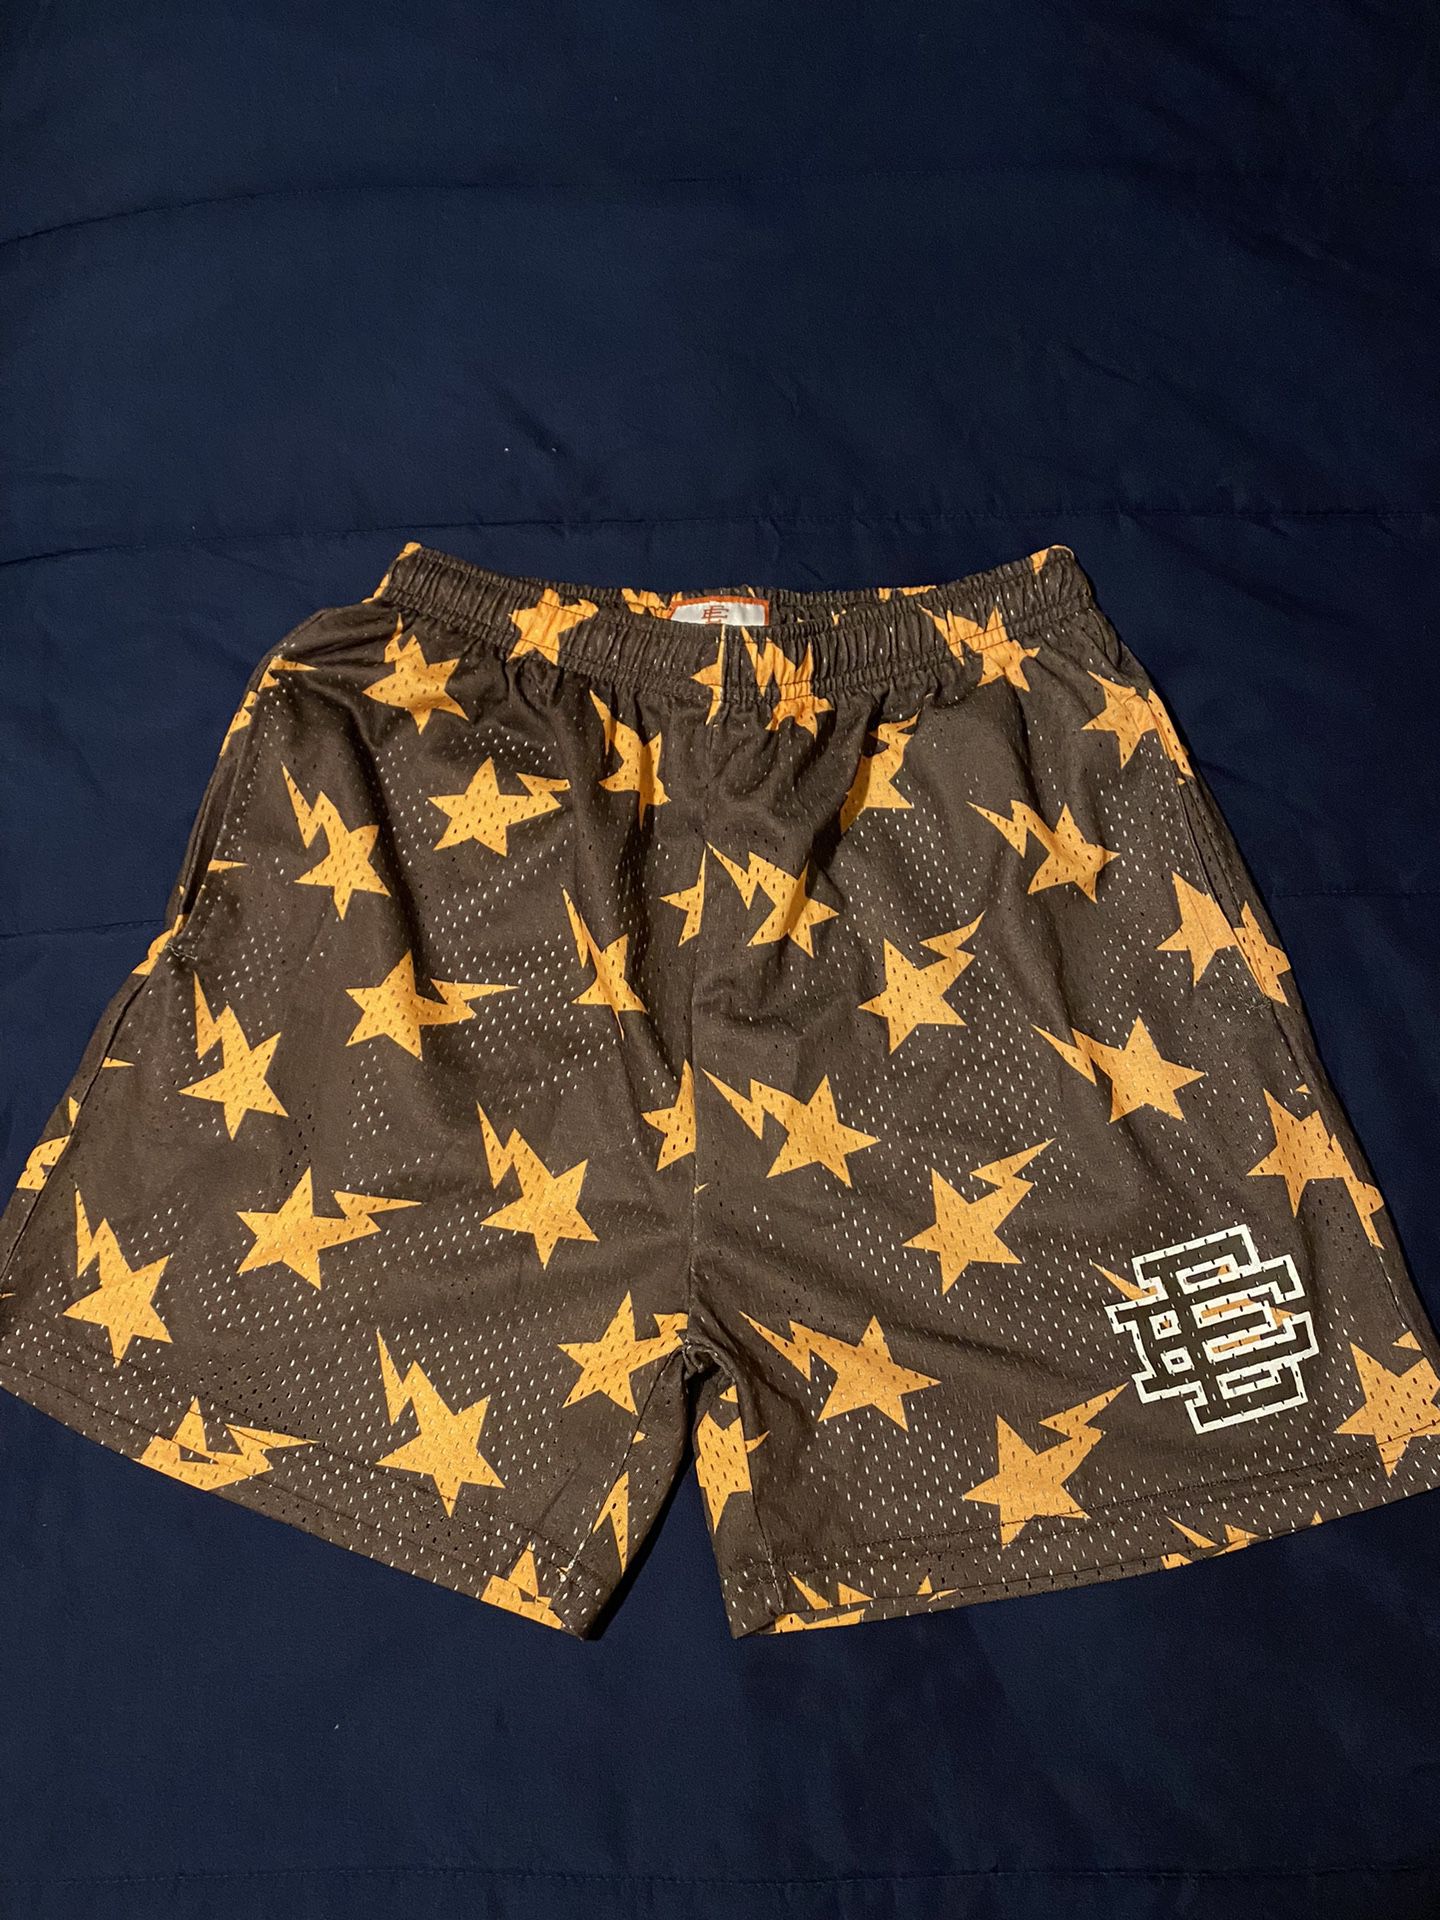 Eric Emanuel X Bape Shorts for Sale in Las Vegas, NV - OfferUp